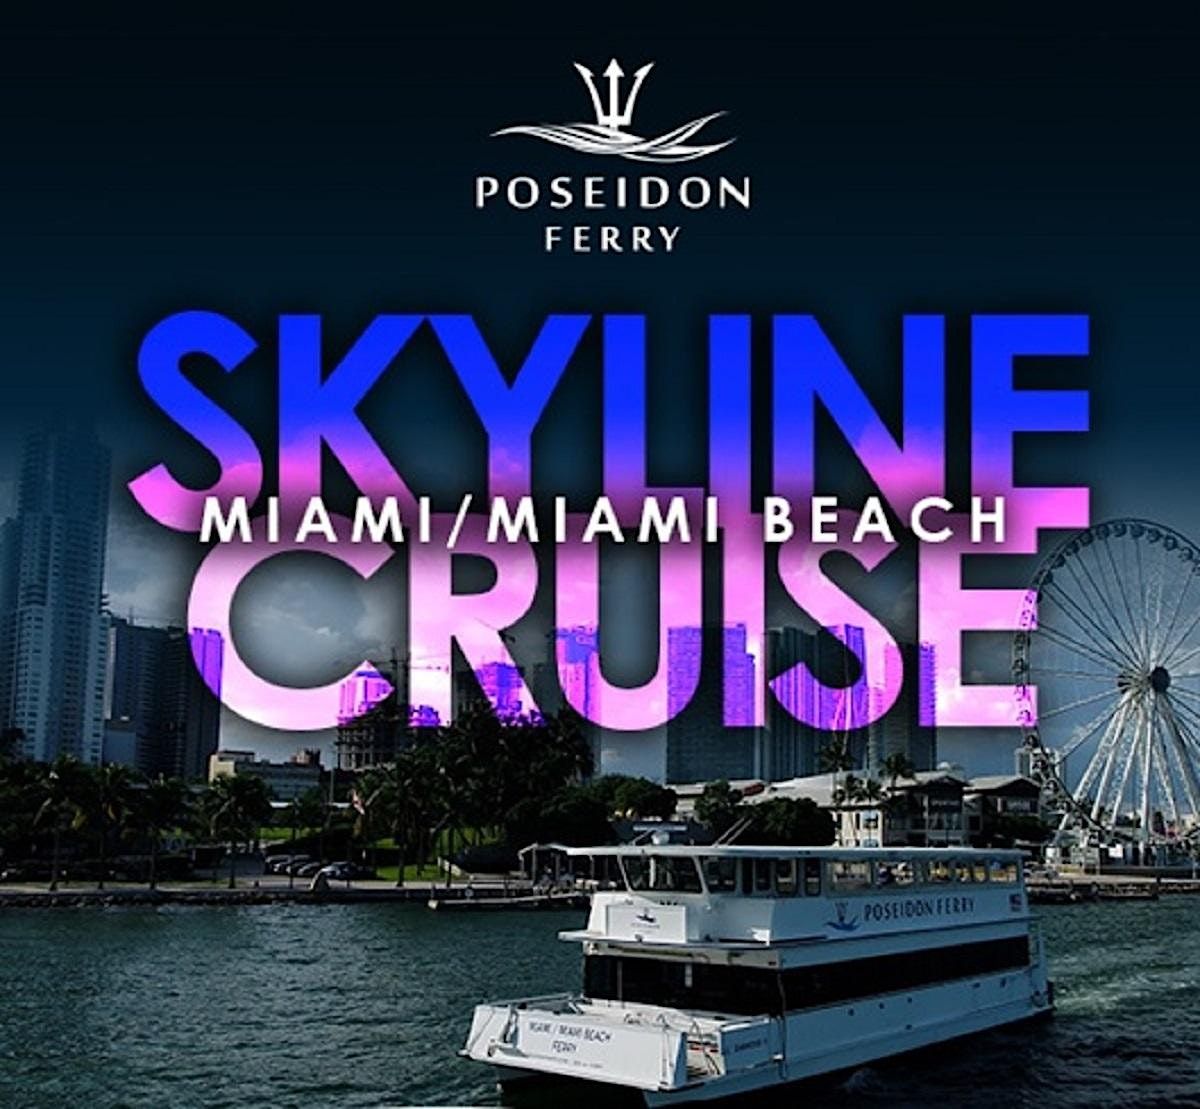 Miami Skyline Cruise